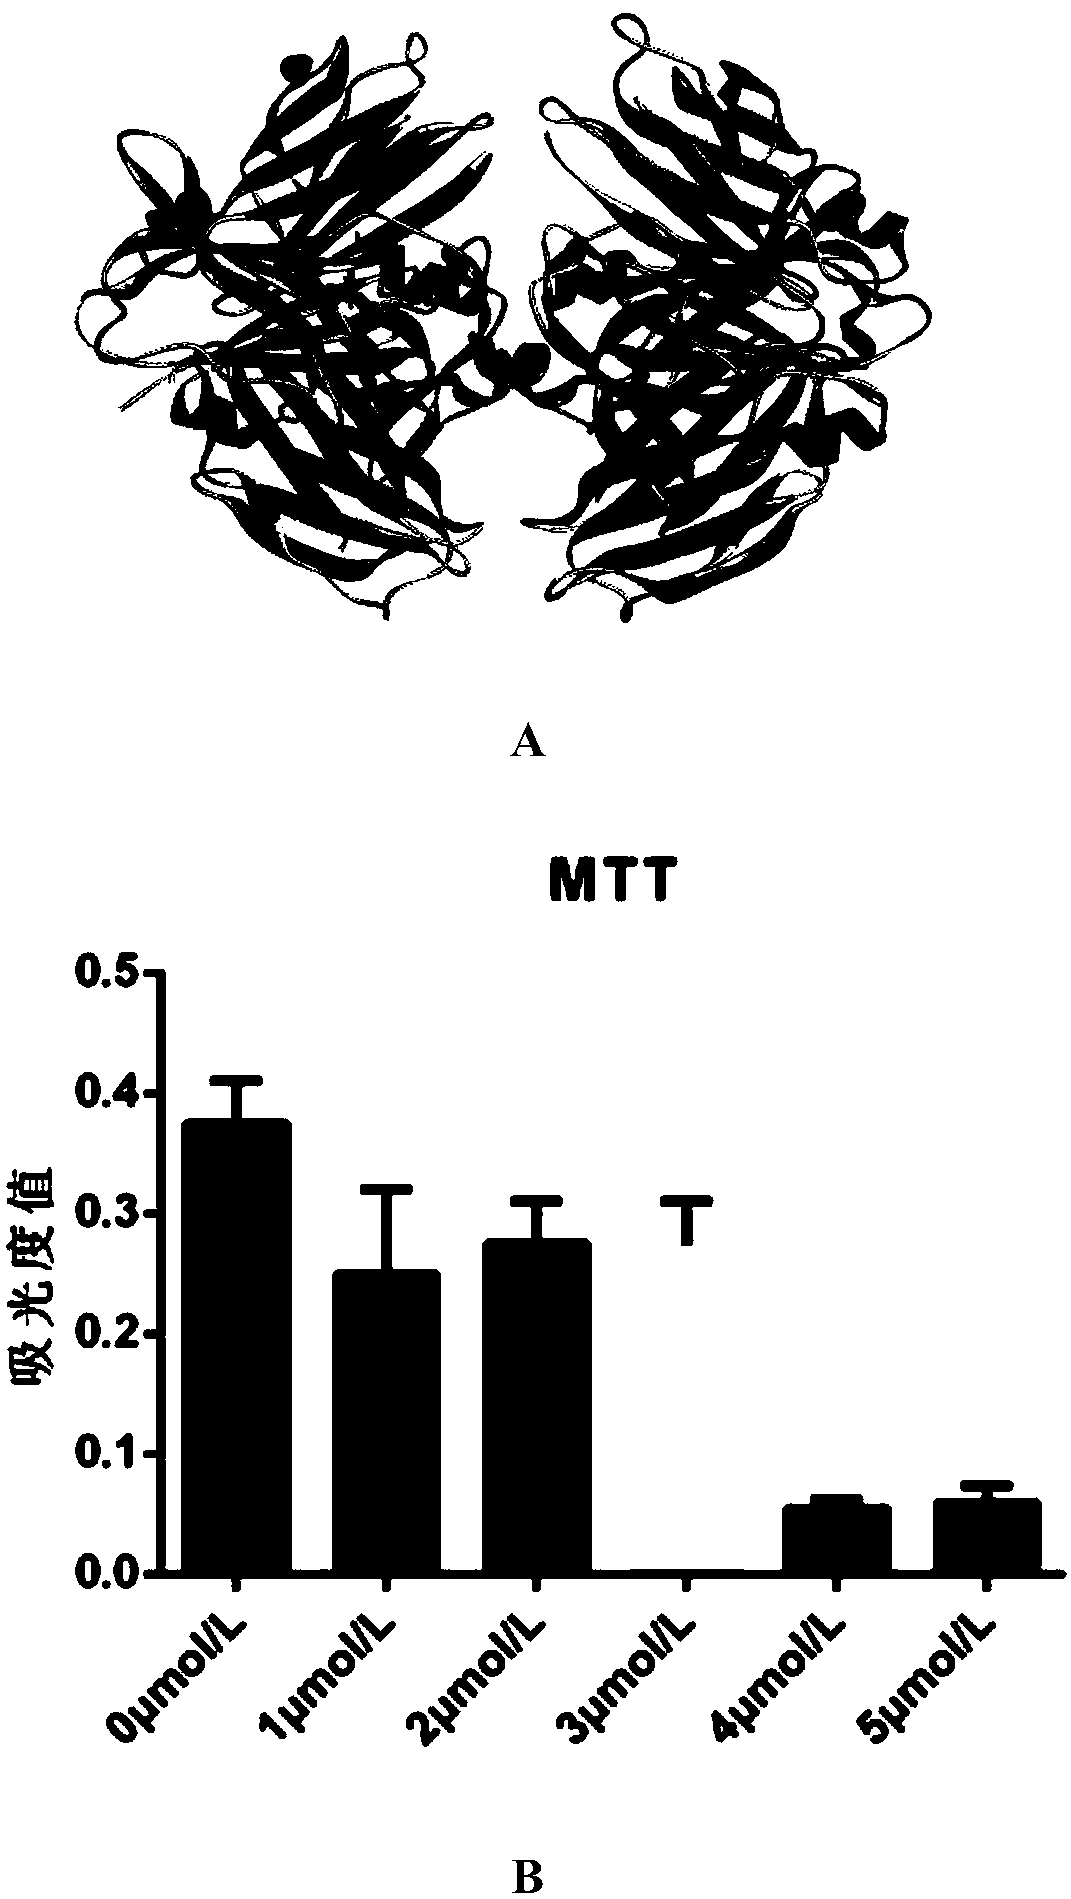 Application of TTR (transthyretin) to angiogenesis inhibition